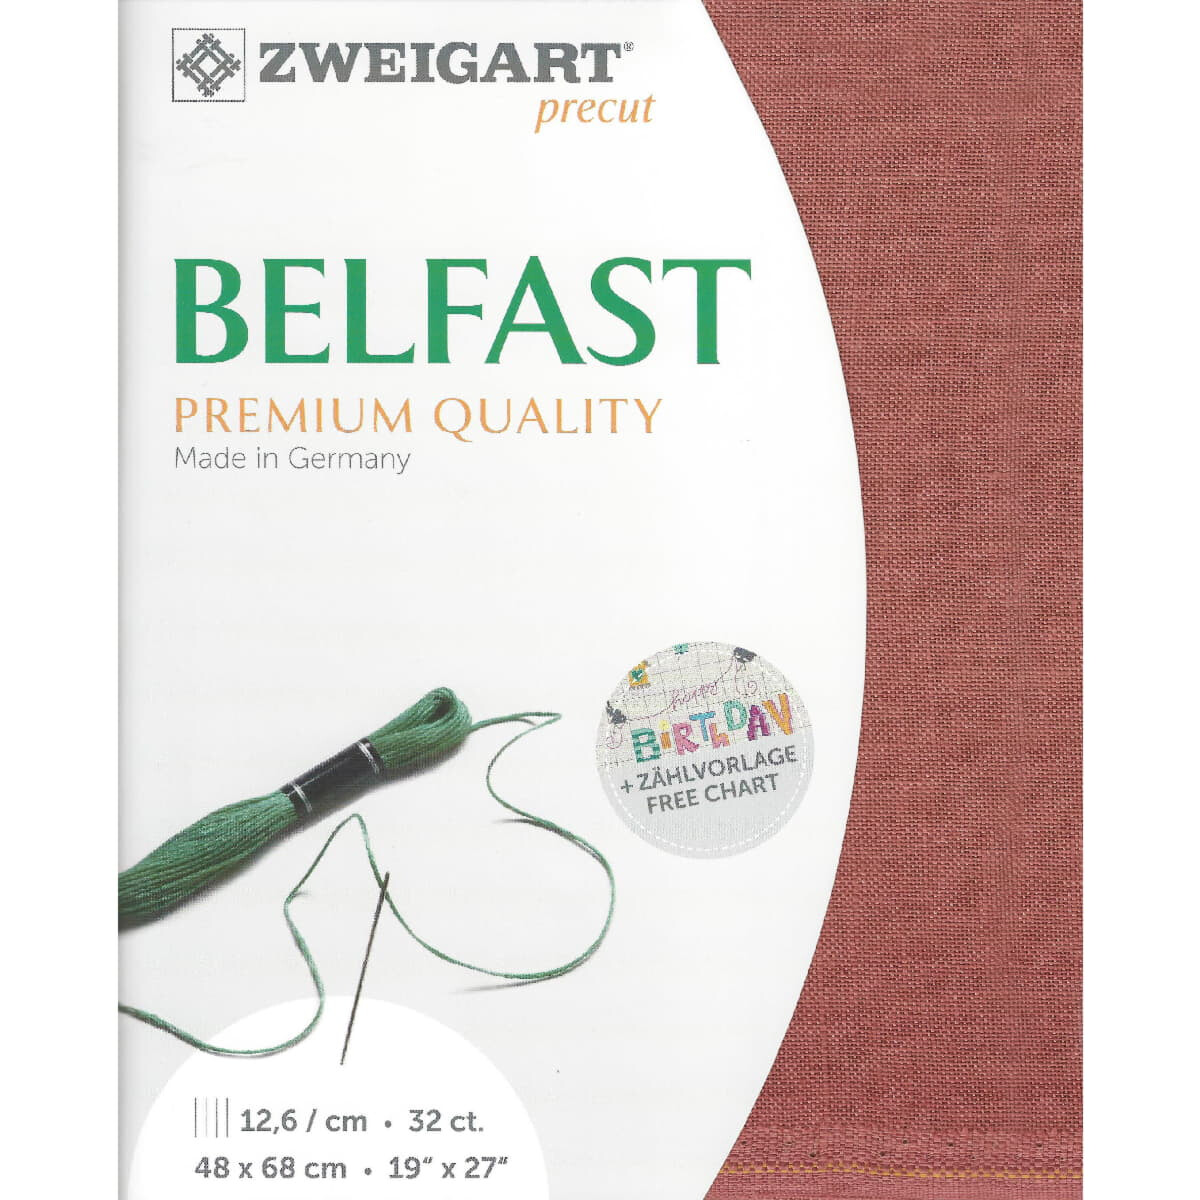 Tessuto Evenweave Belfast Zweigart Precute 32 ct. 3609...